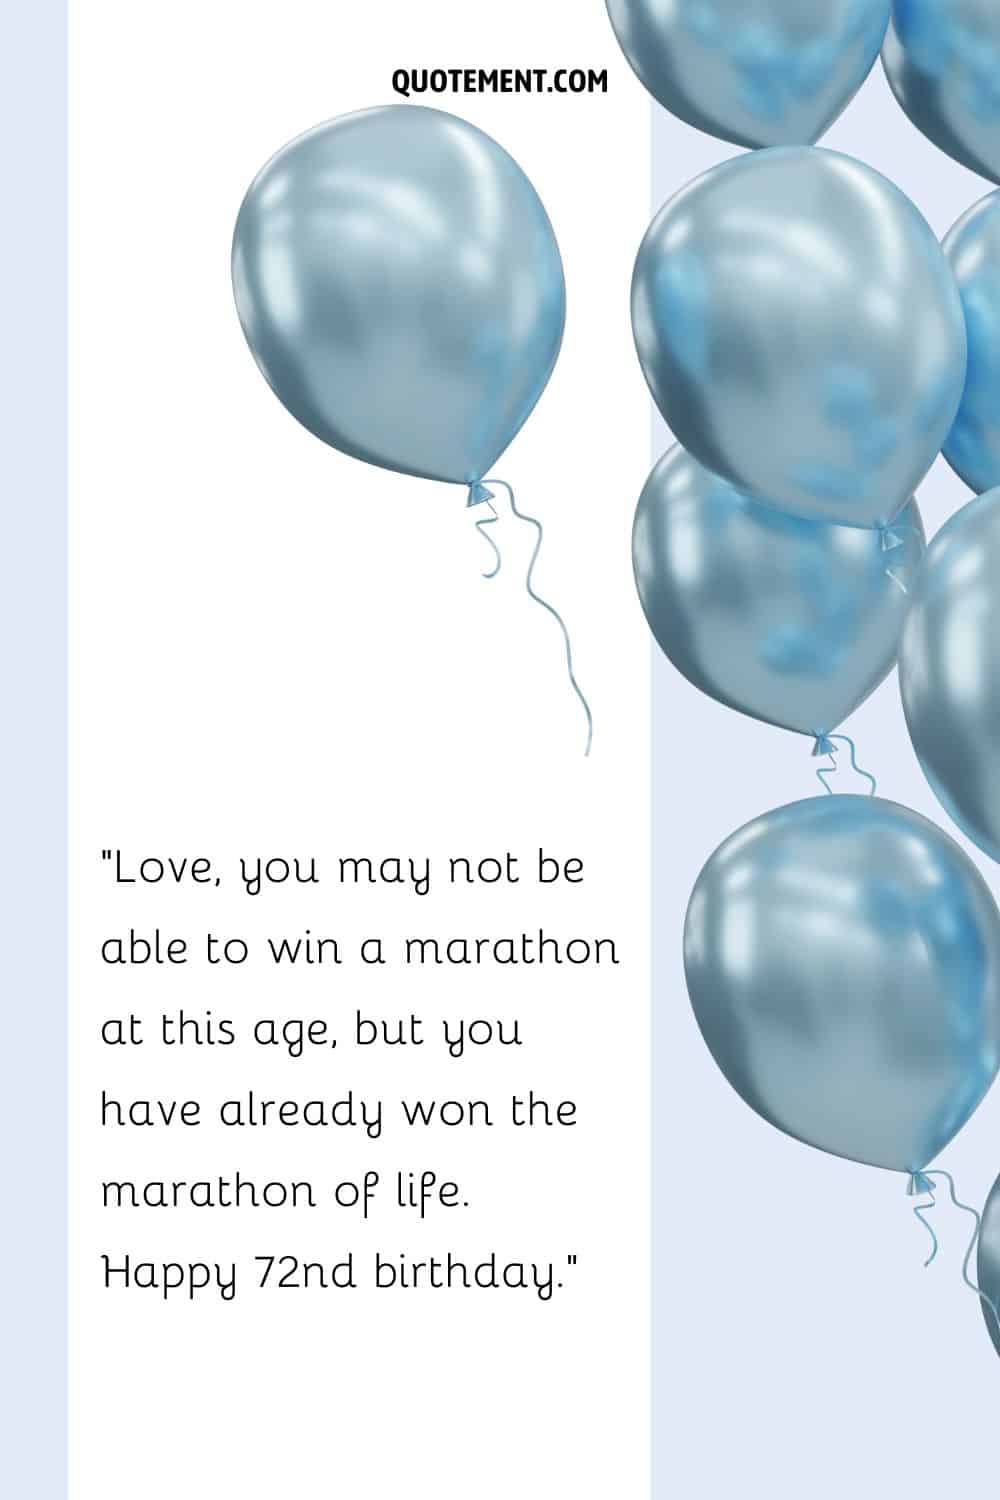 blue balloons representing happy birthday wish for husband